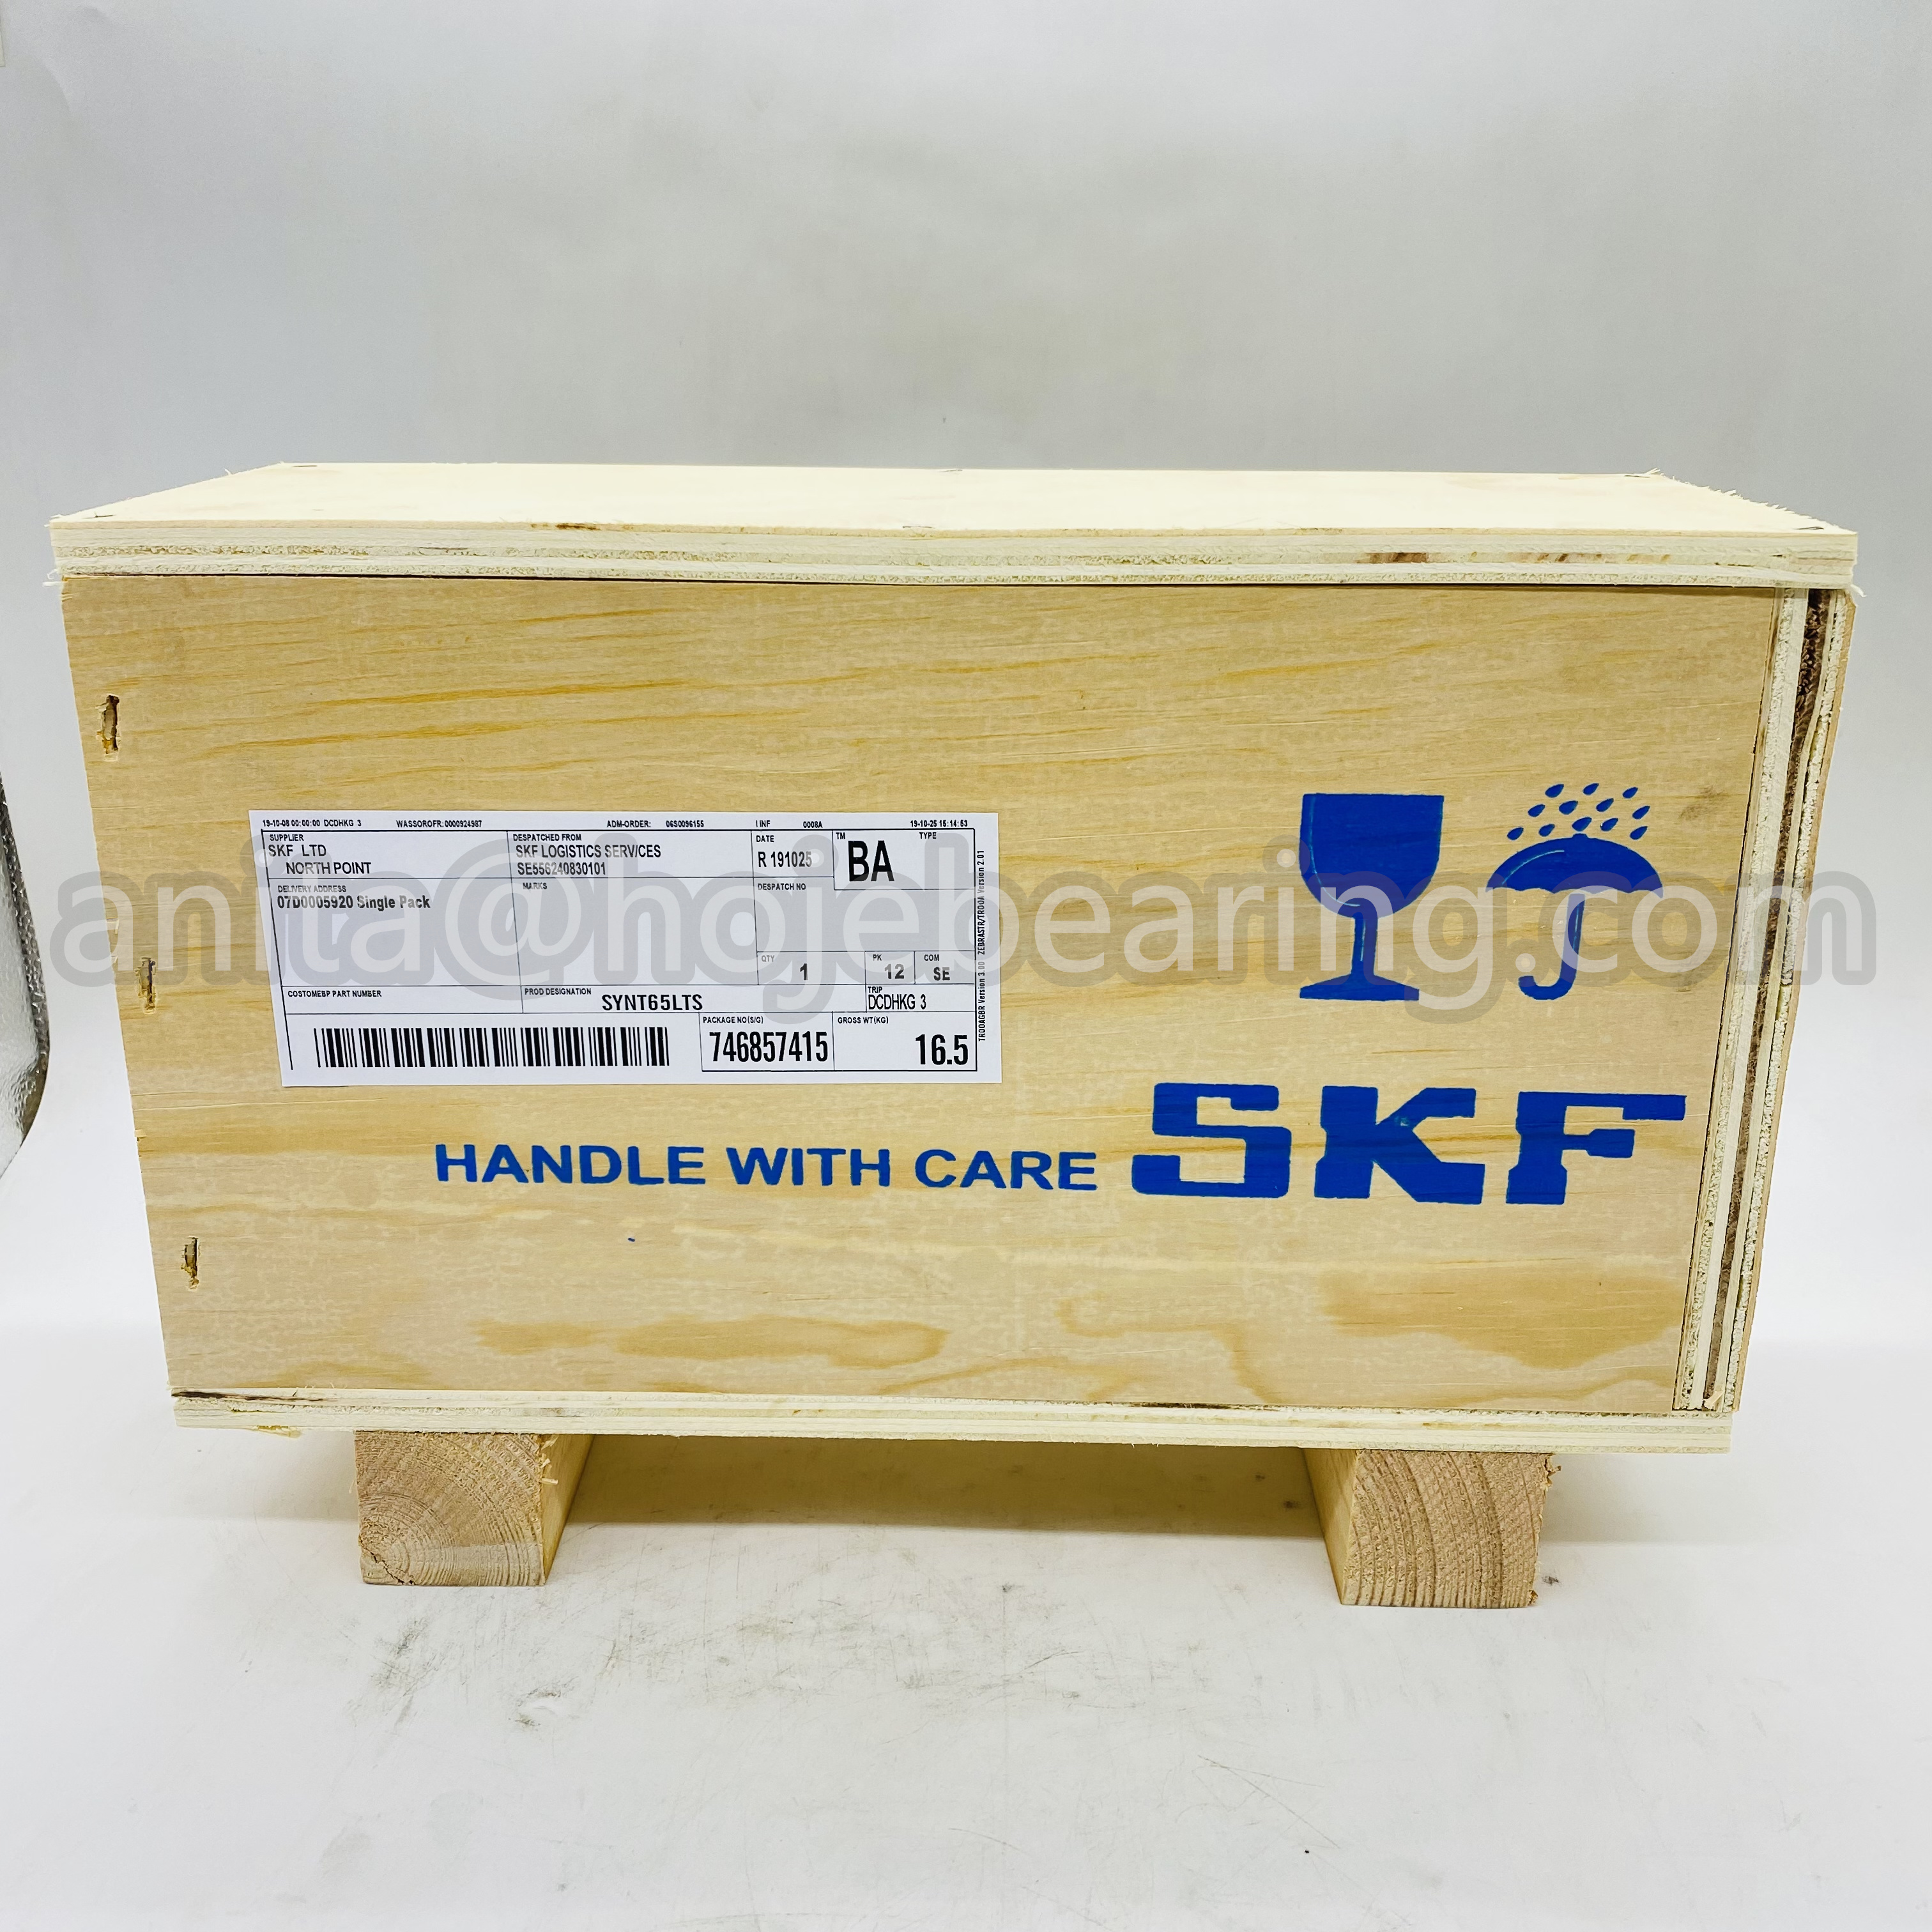 SKF SYNT 65 F, Roller bearing plummer block units, for metric shafts